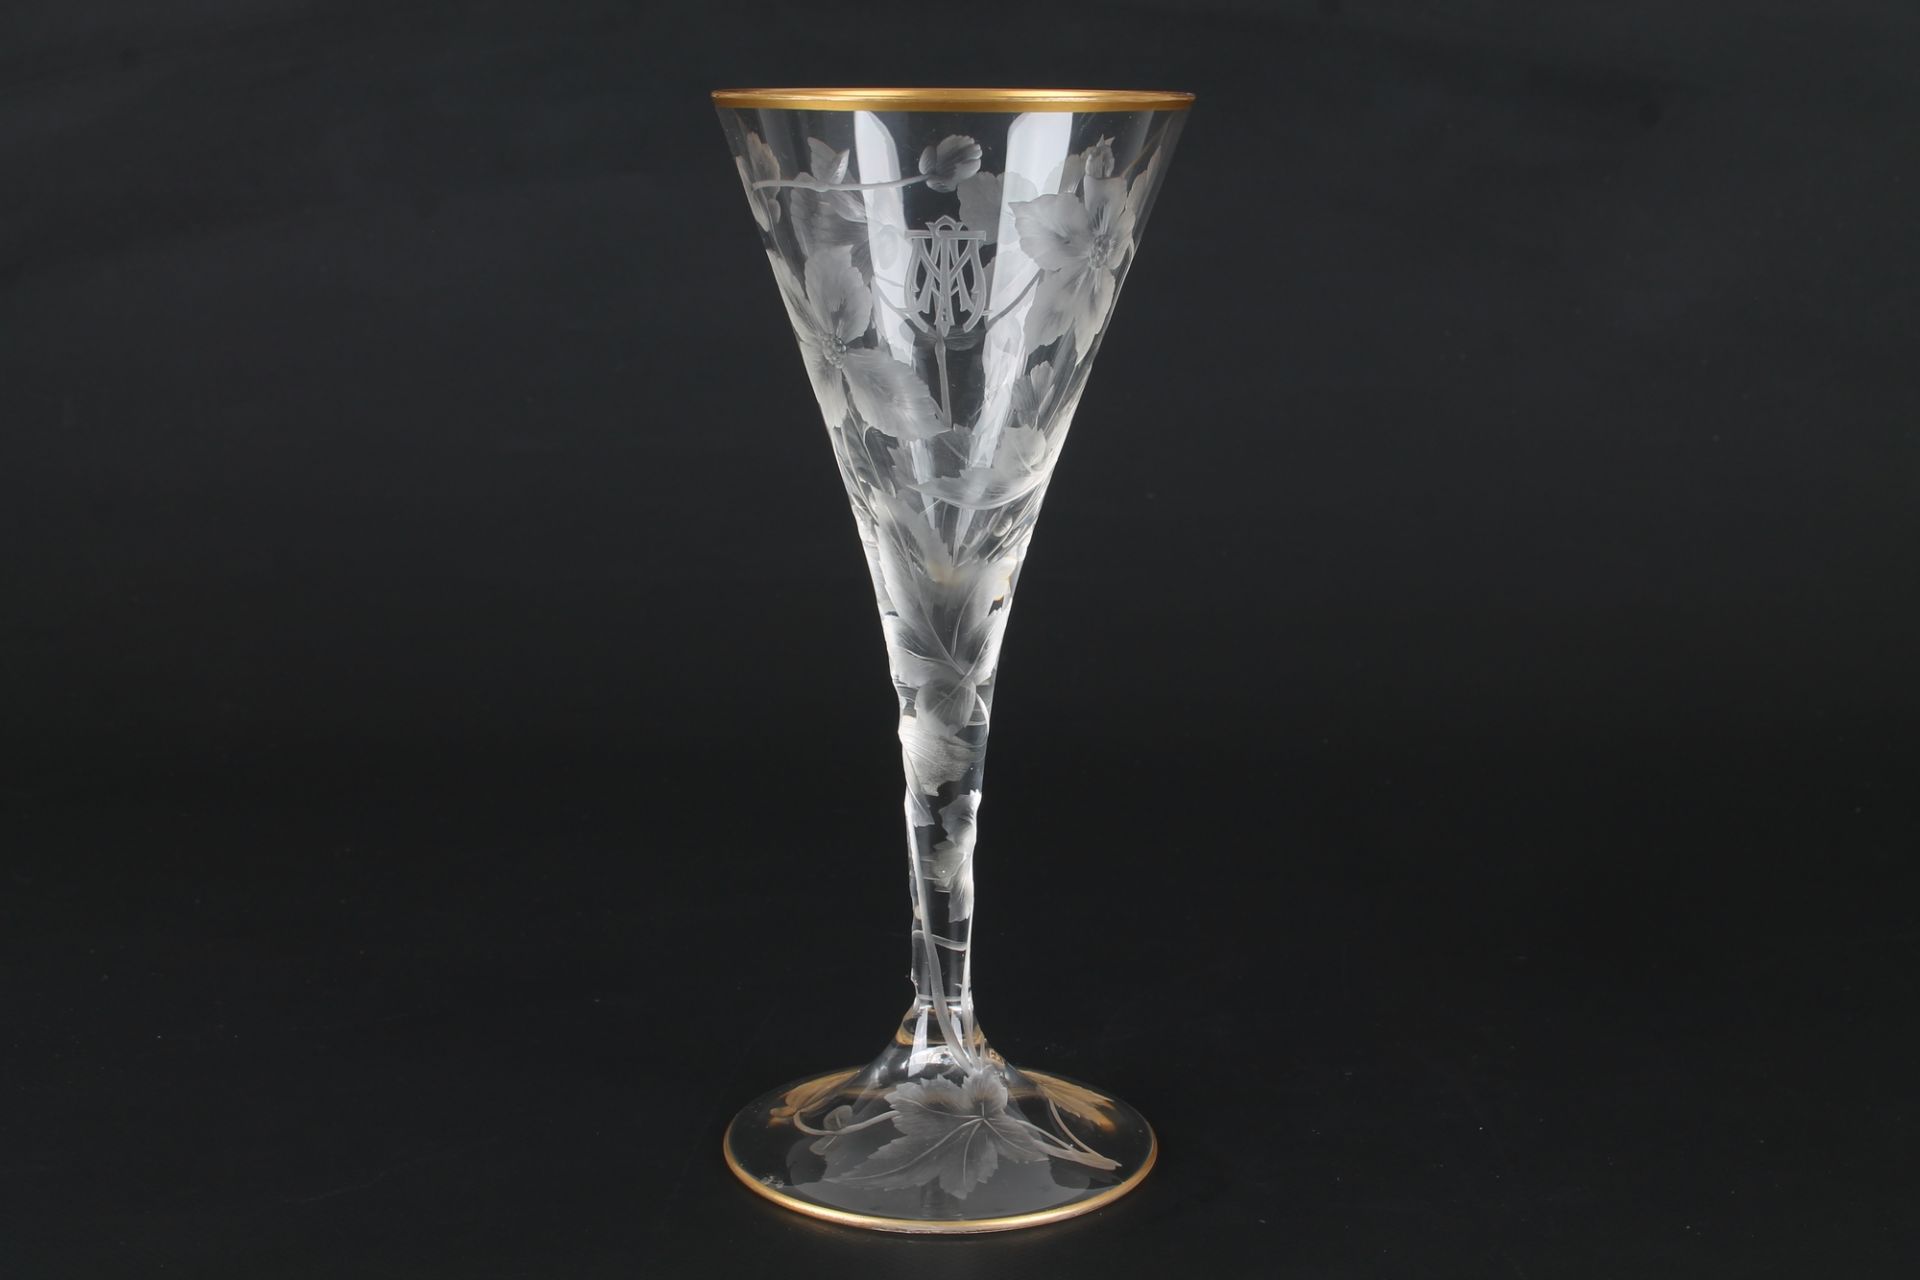 Ludwig Moser Karlsbad Kelchglas, glass goblet,